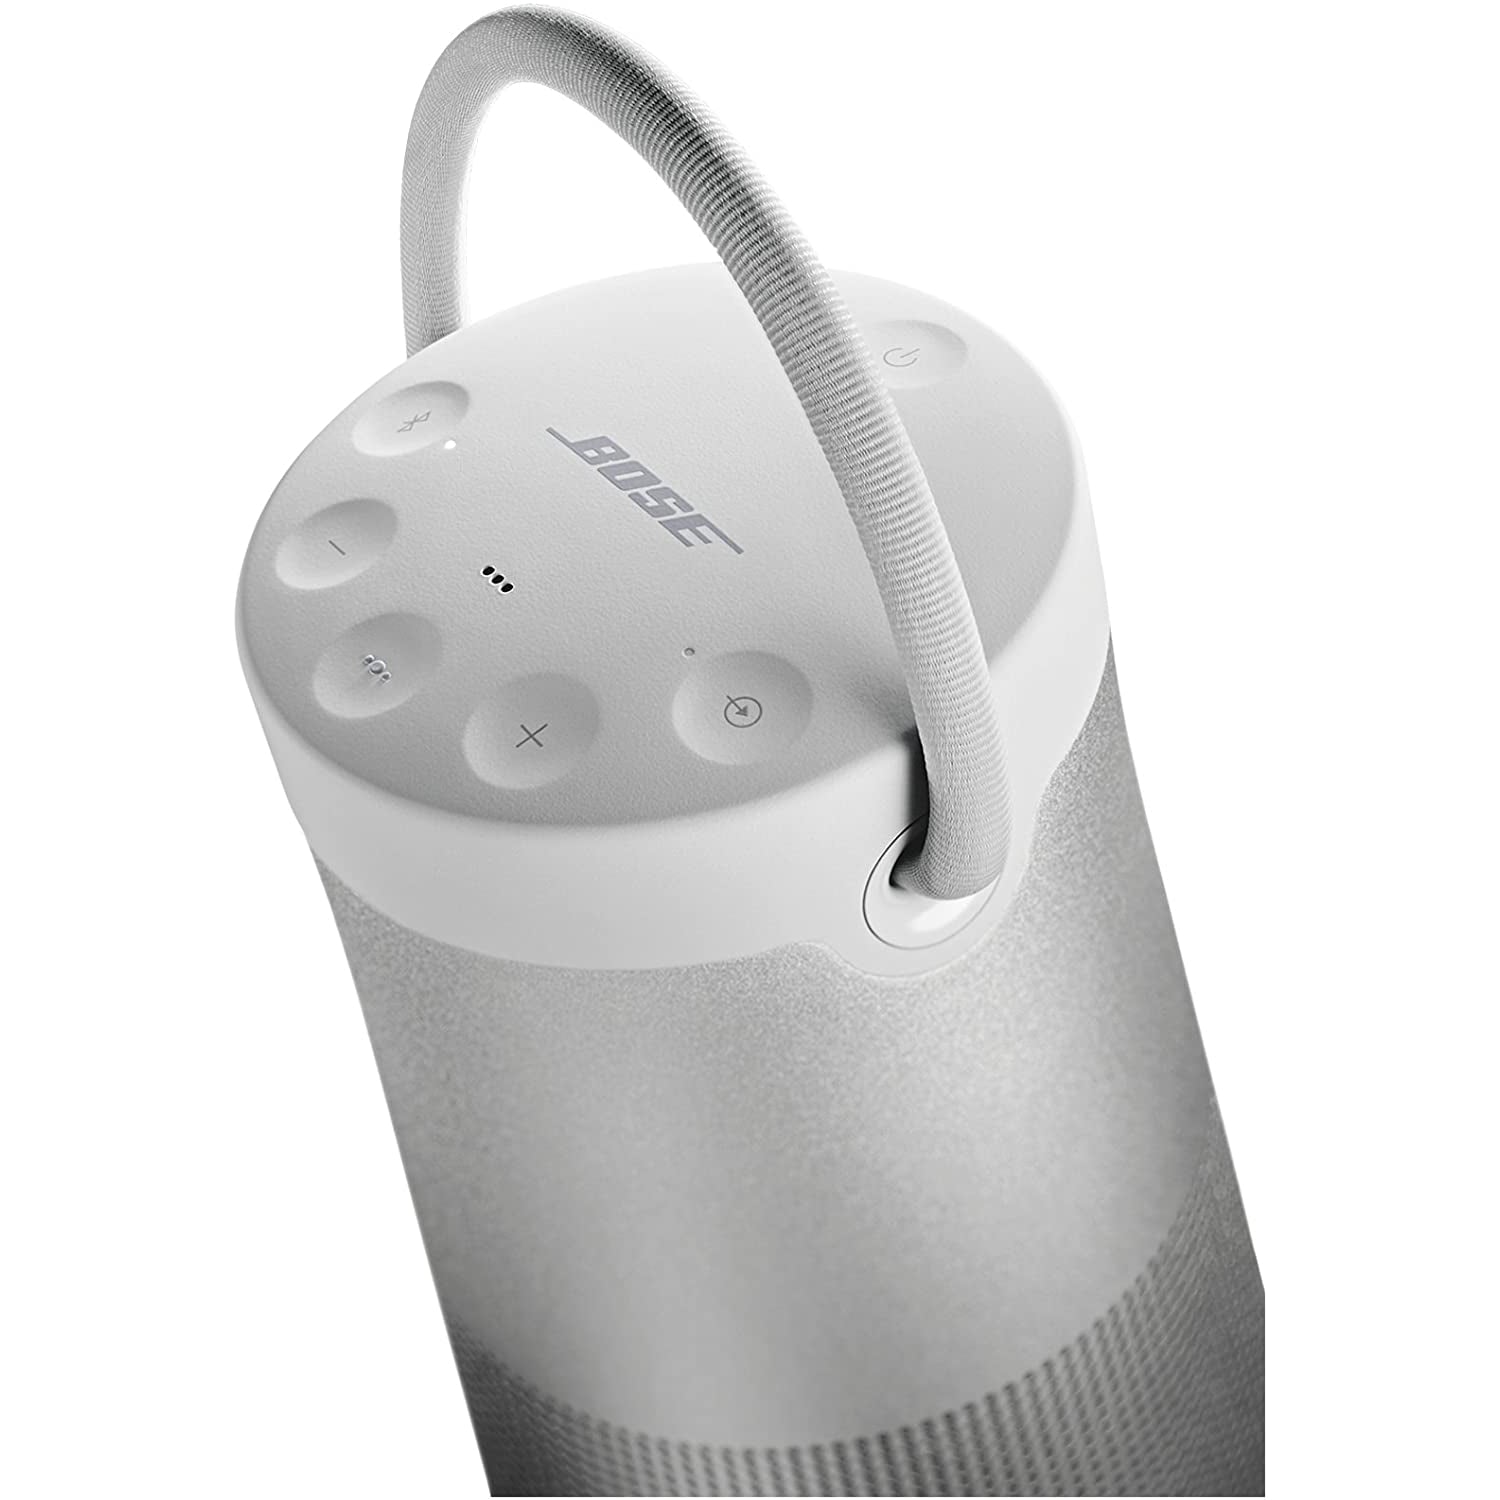 Bose SoundLink Revolve+ Portable Bluetooth Speaker - Luxe Silver - Refurbished Good